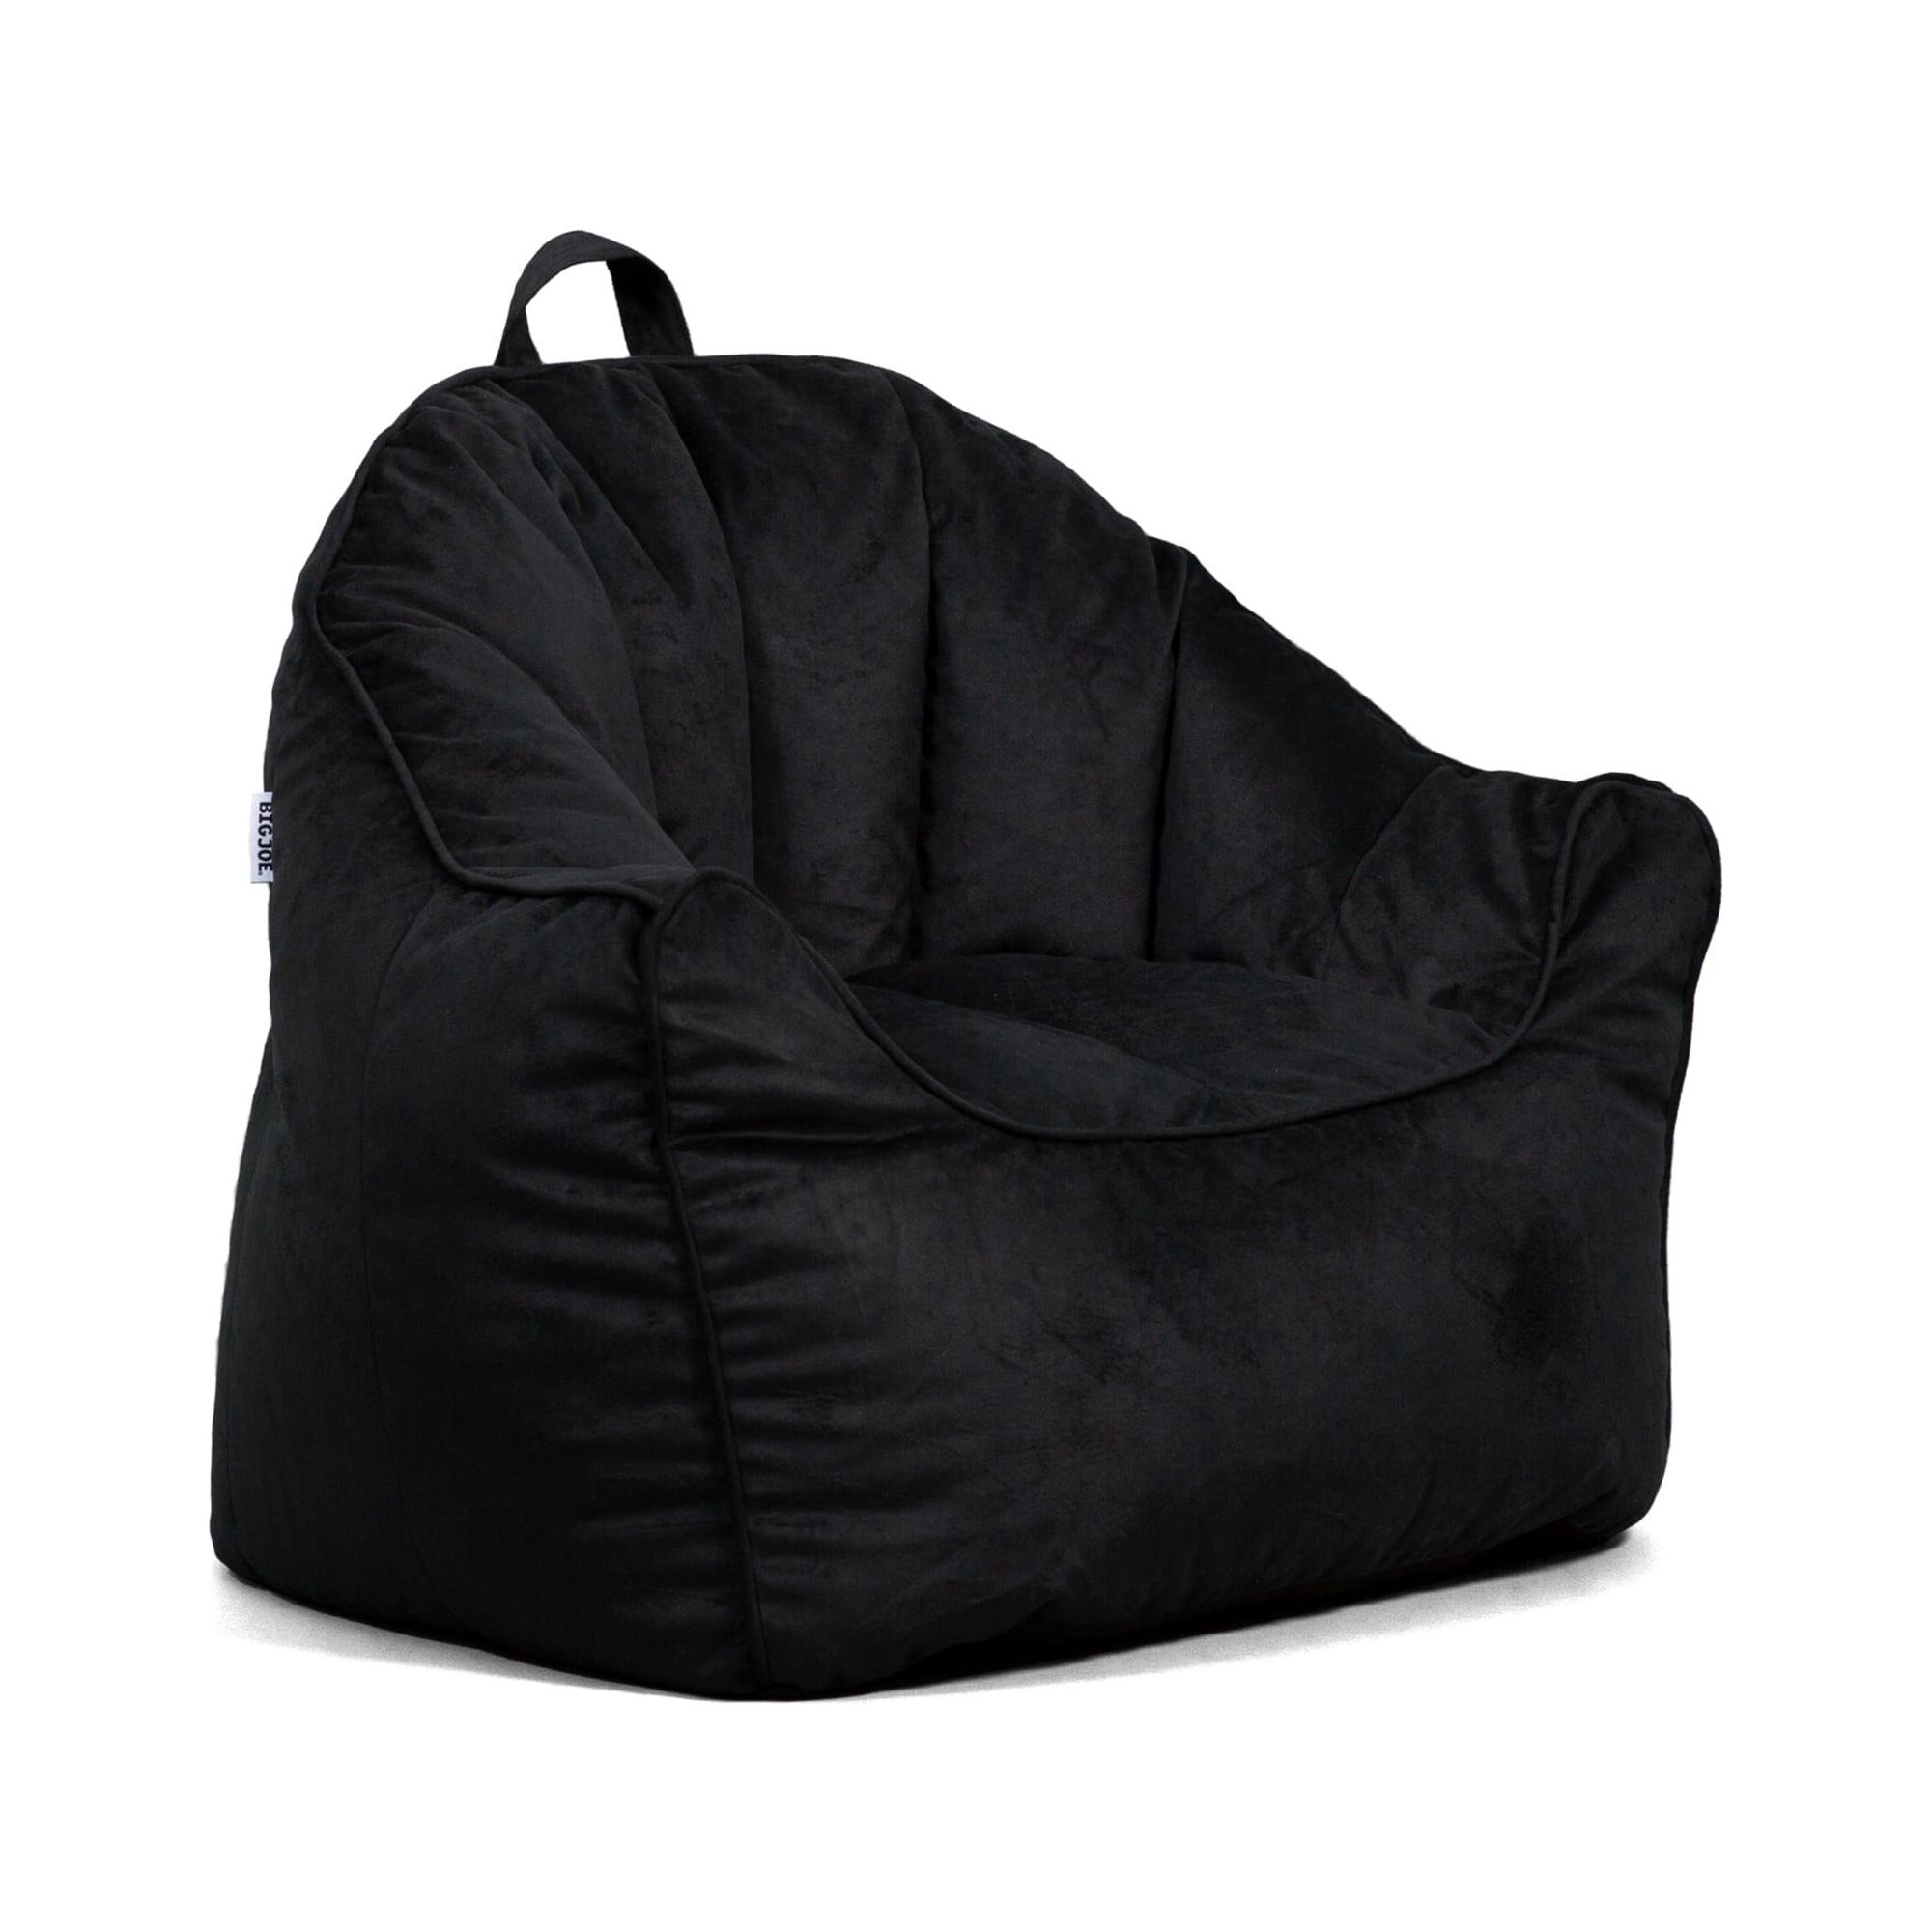 Big Joe Hug Bean Bag Chair, Black Plush, Soft Polyester, 3 feet - image 2 of 8